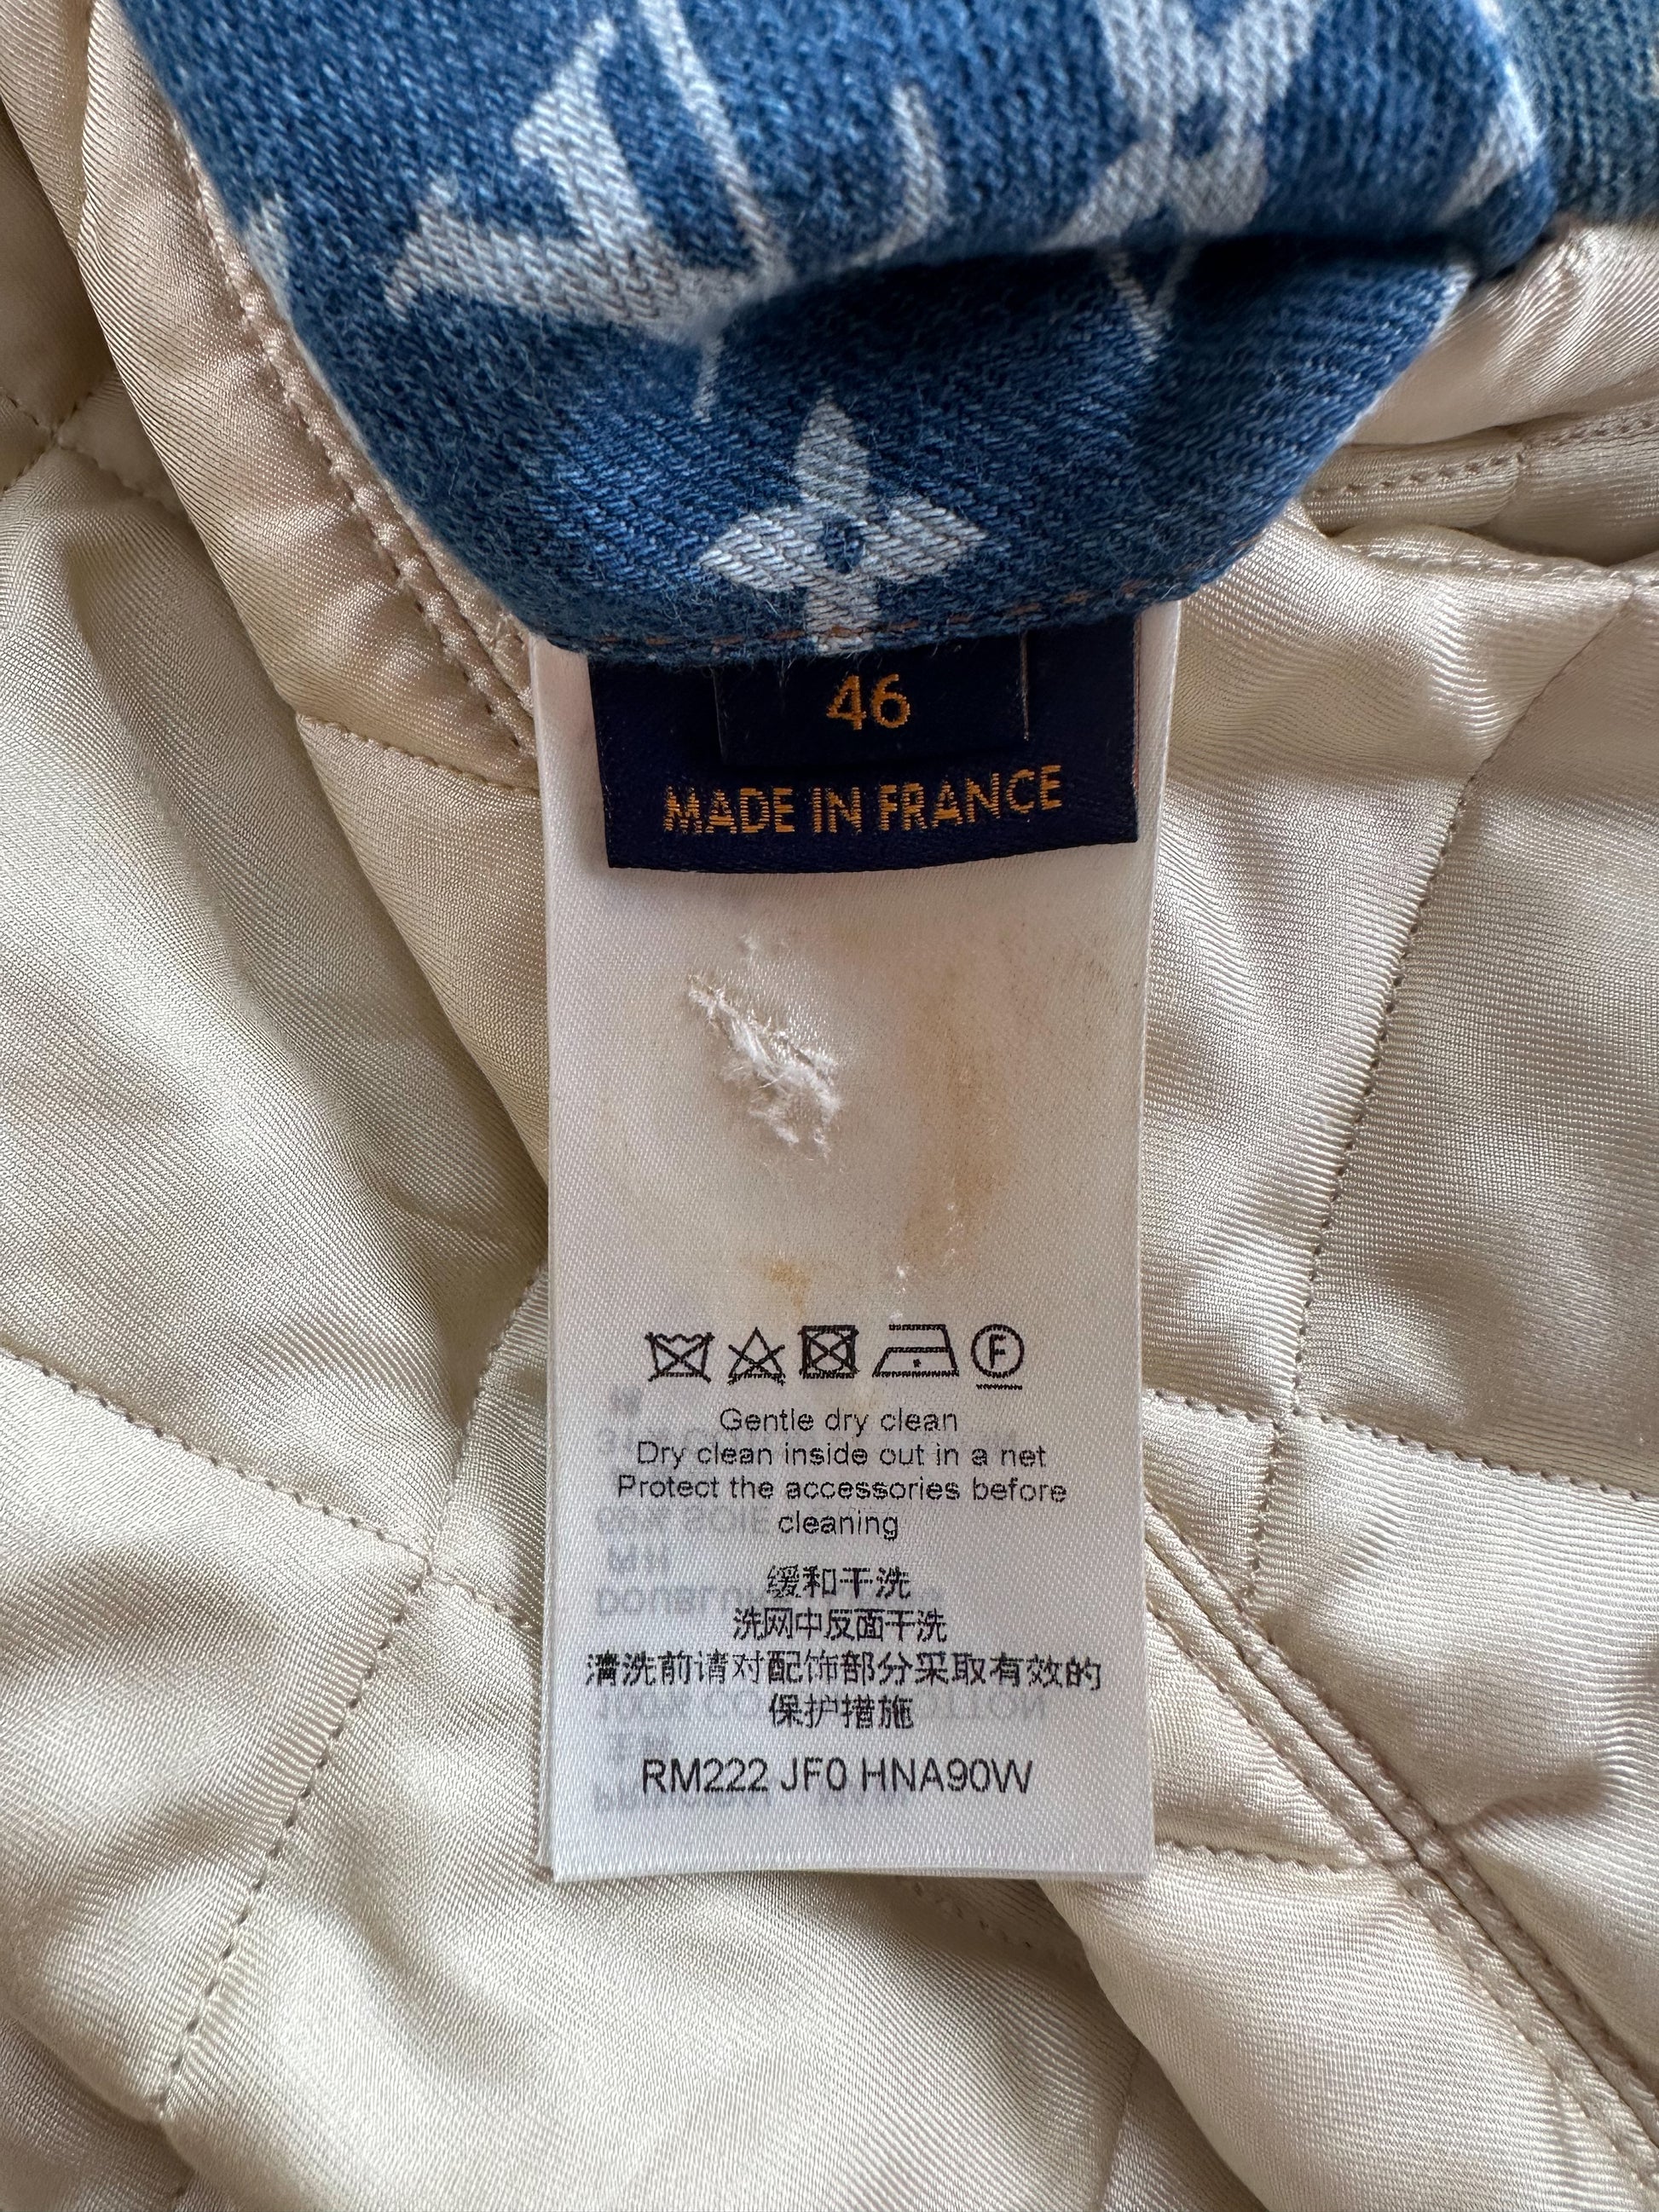 Louis Vuitton Blue Monogram Distressed Floral Workwear Jacket